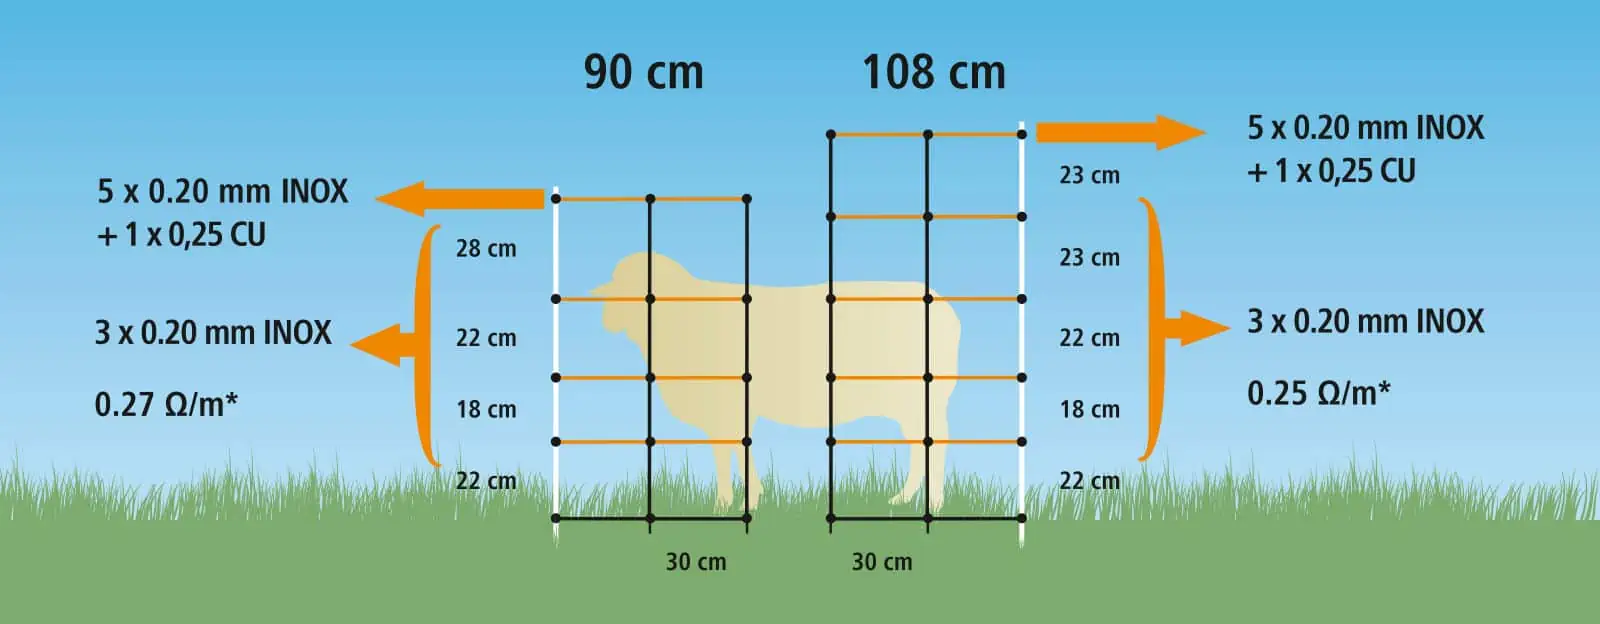 TITAN LIGHT Sheep Netting 50 m height: 108cm - double prong